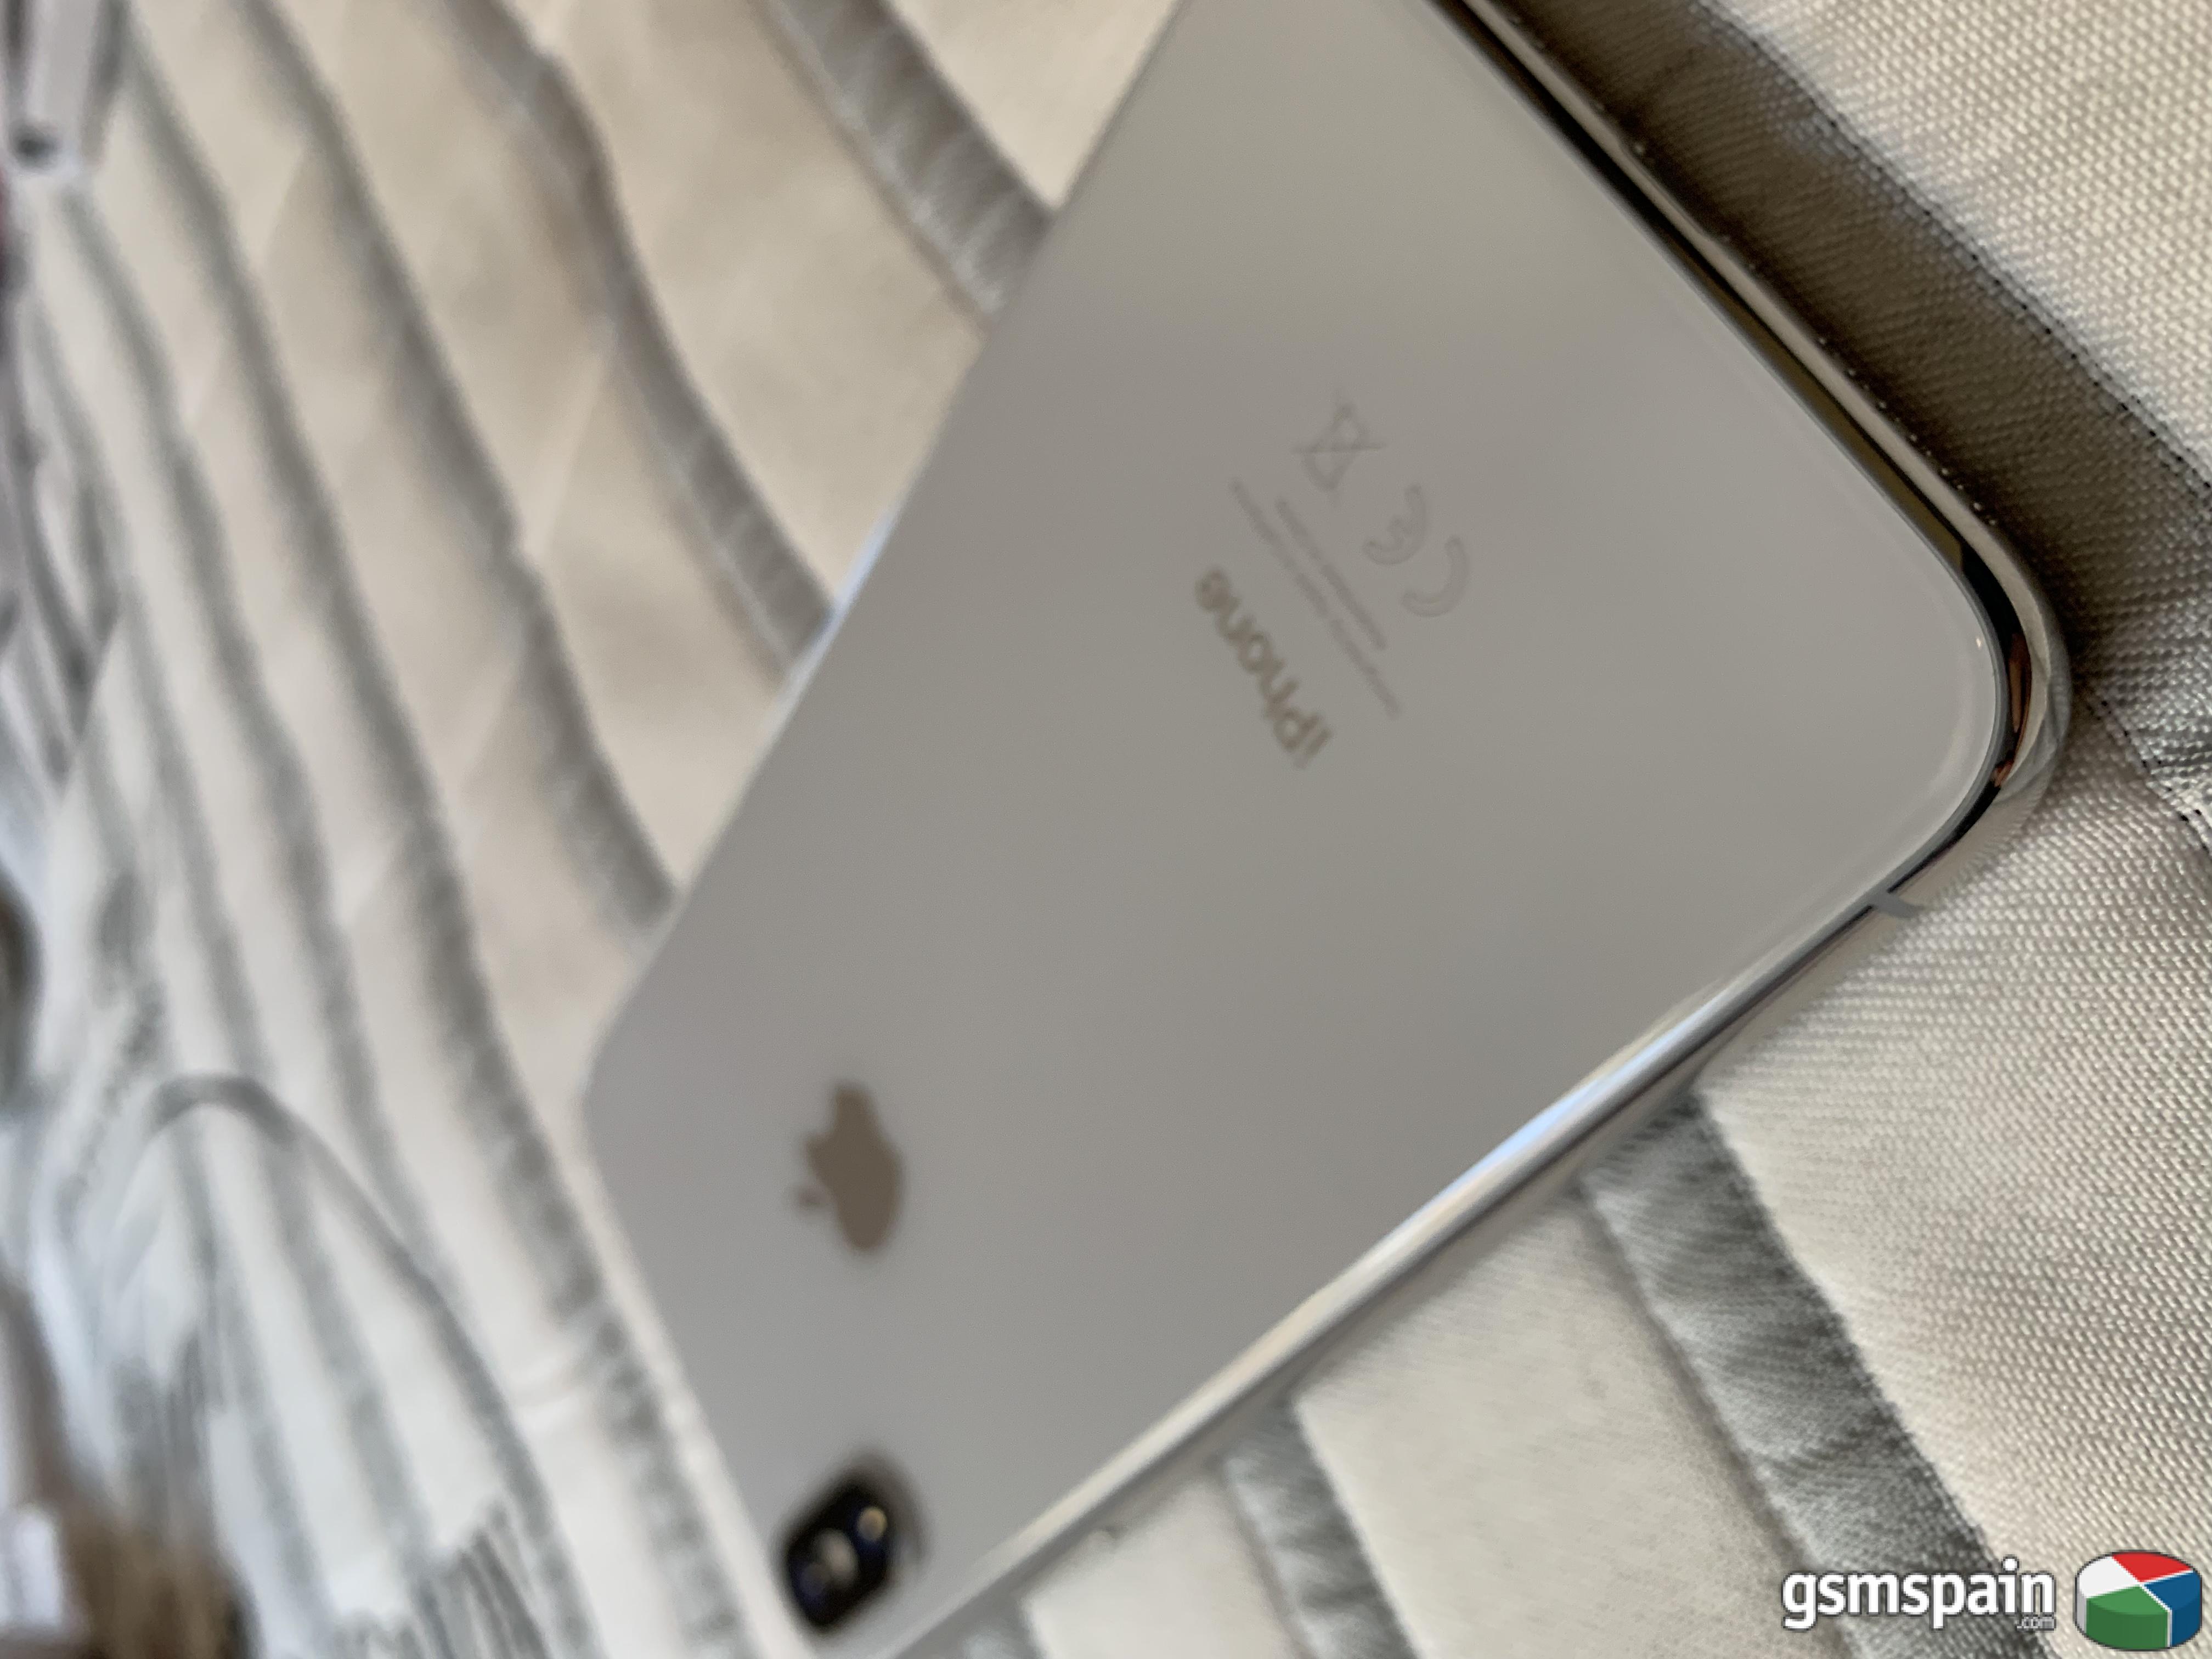 [VENDO] Iphone X SIlver (Plata) 64gb impecable con garantia Apple.